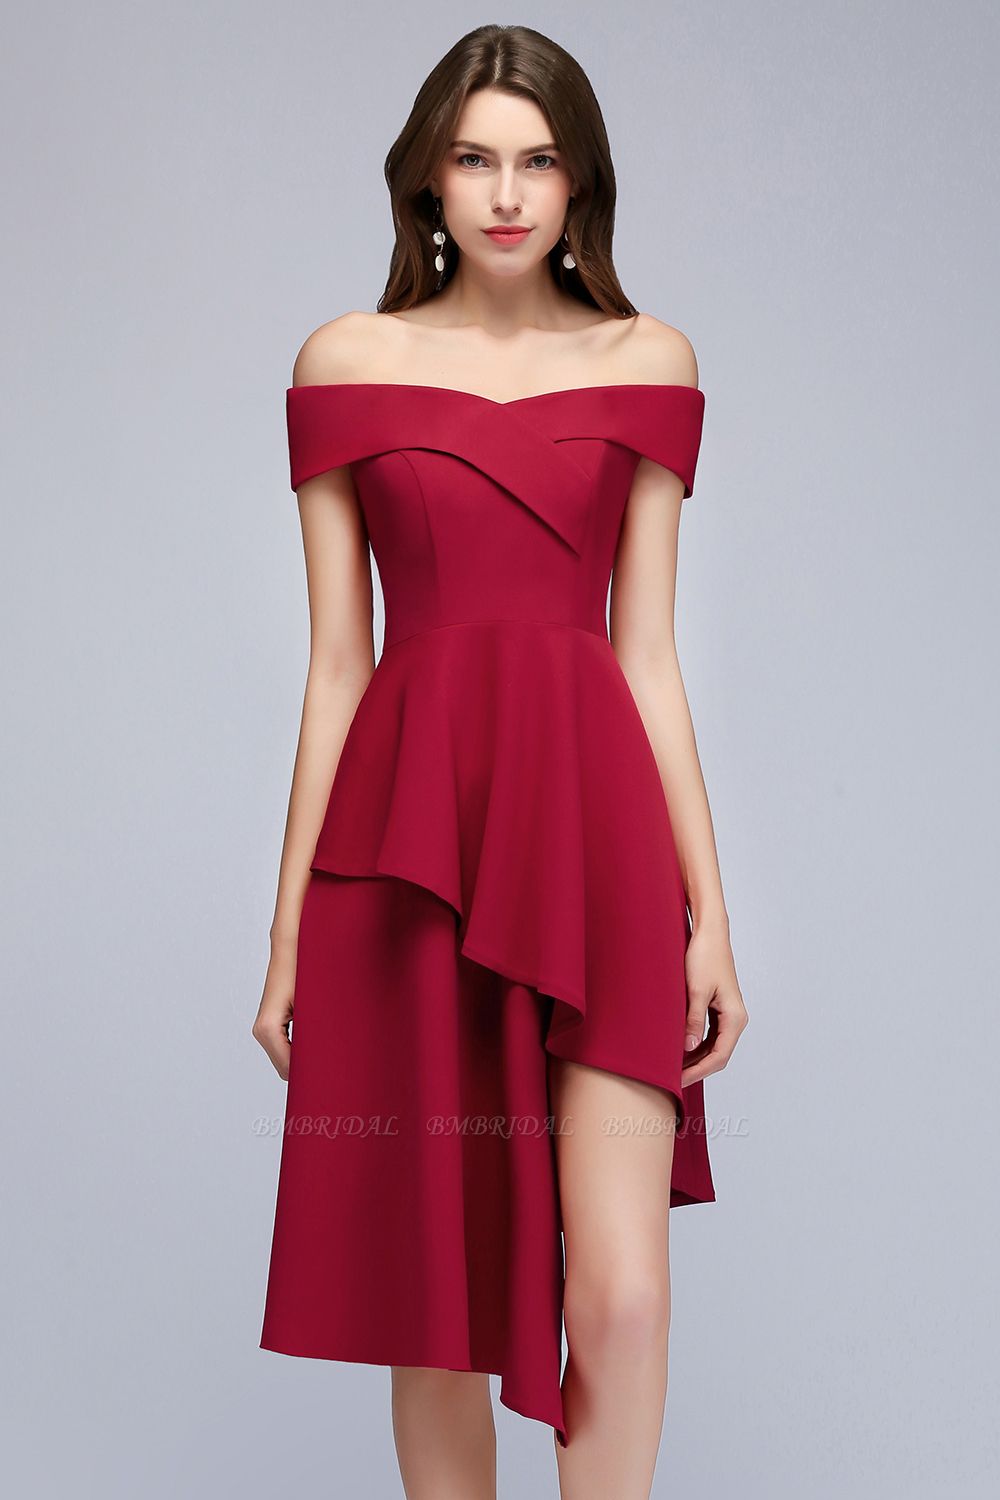 BMbridal A-line Asymmetrical Short Off-the-shoulder Burgundy Prom Dress